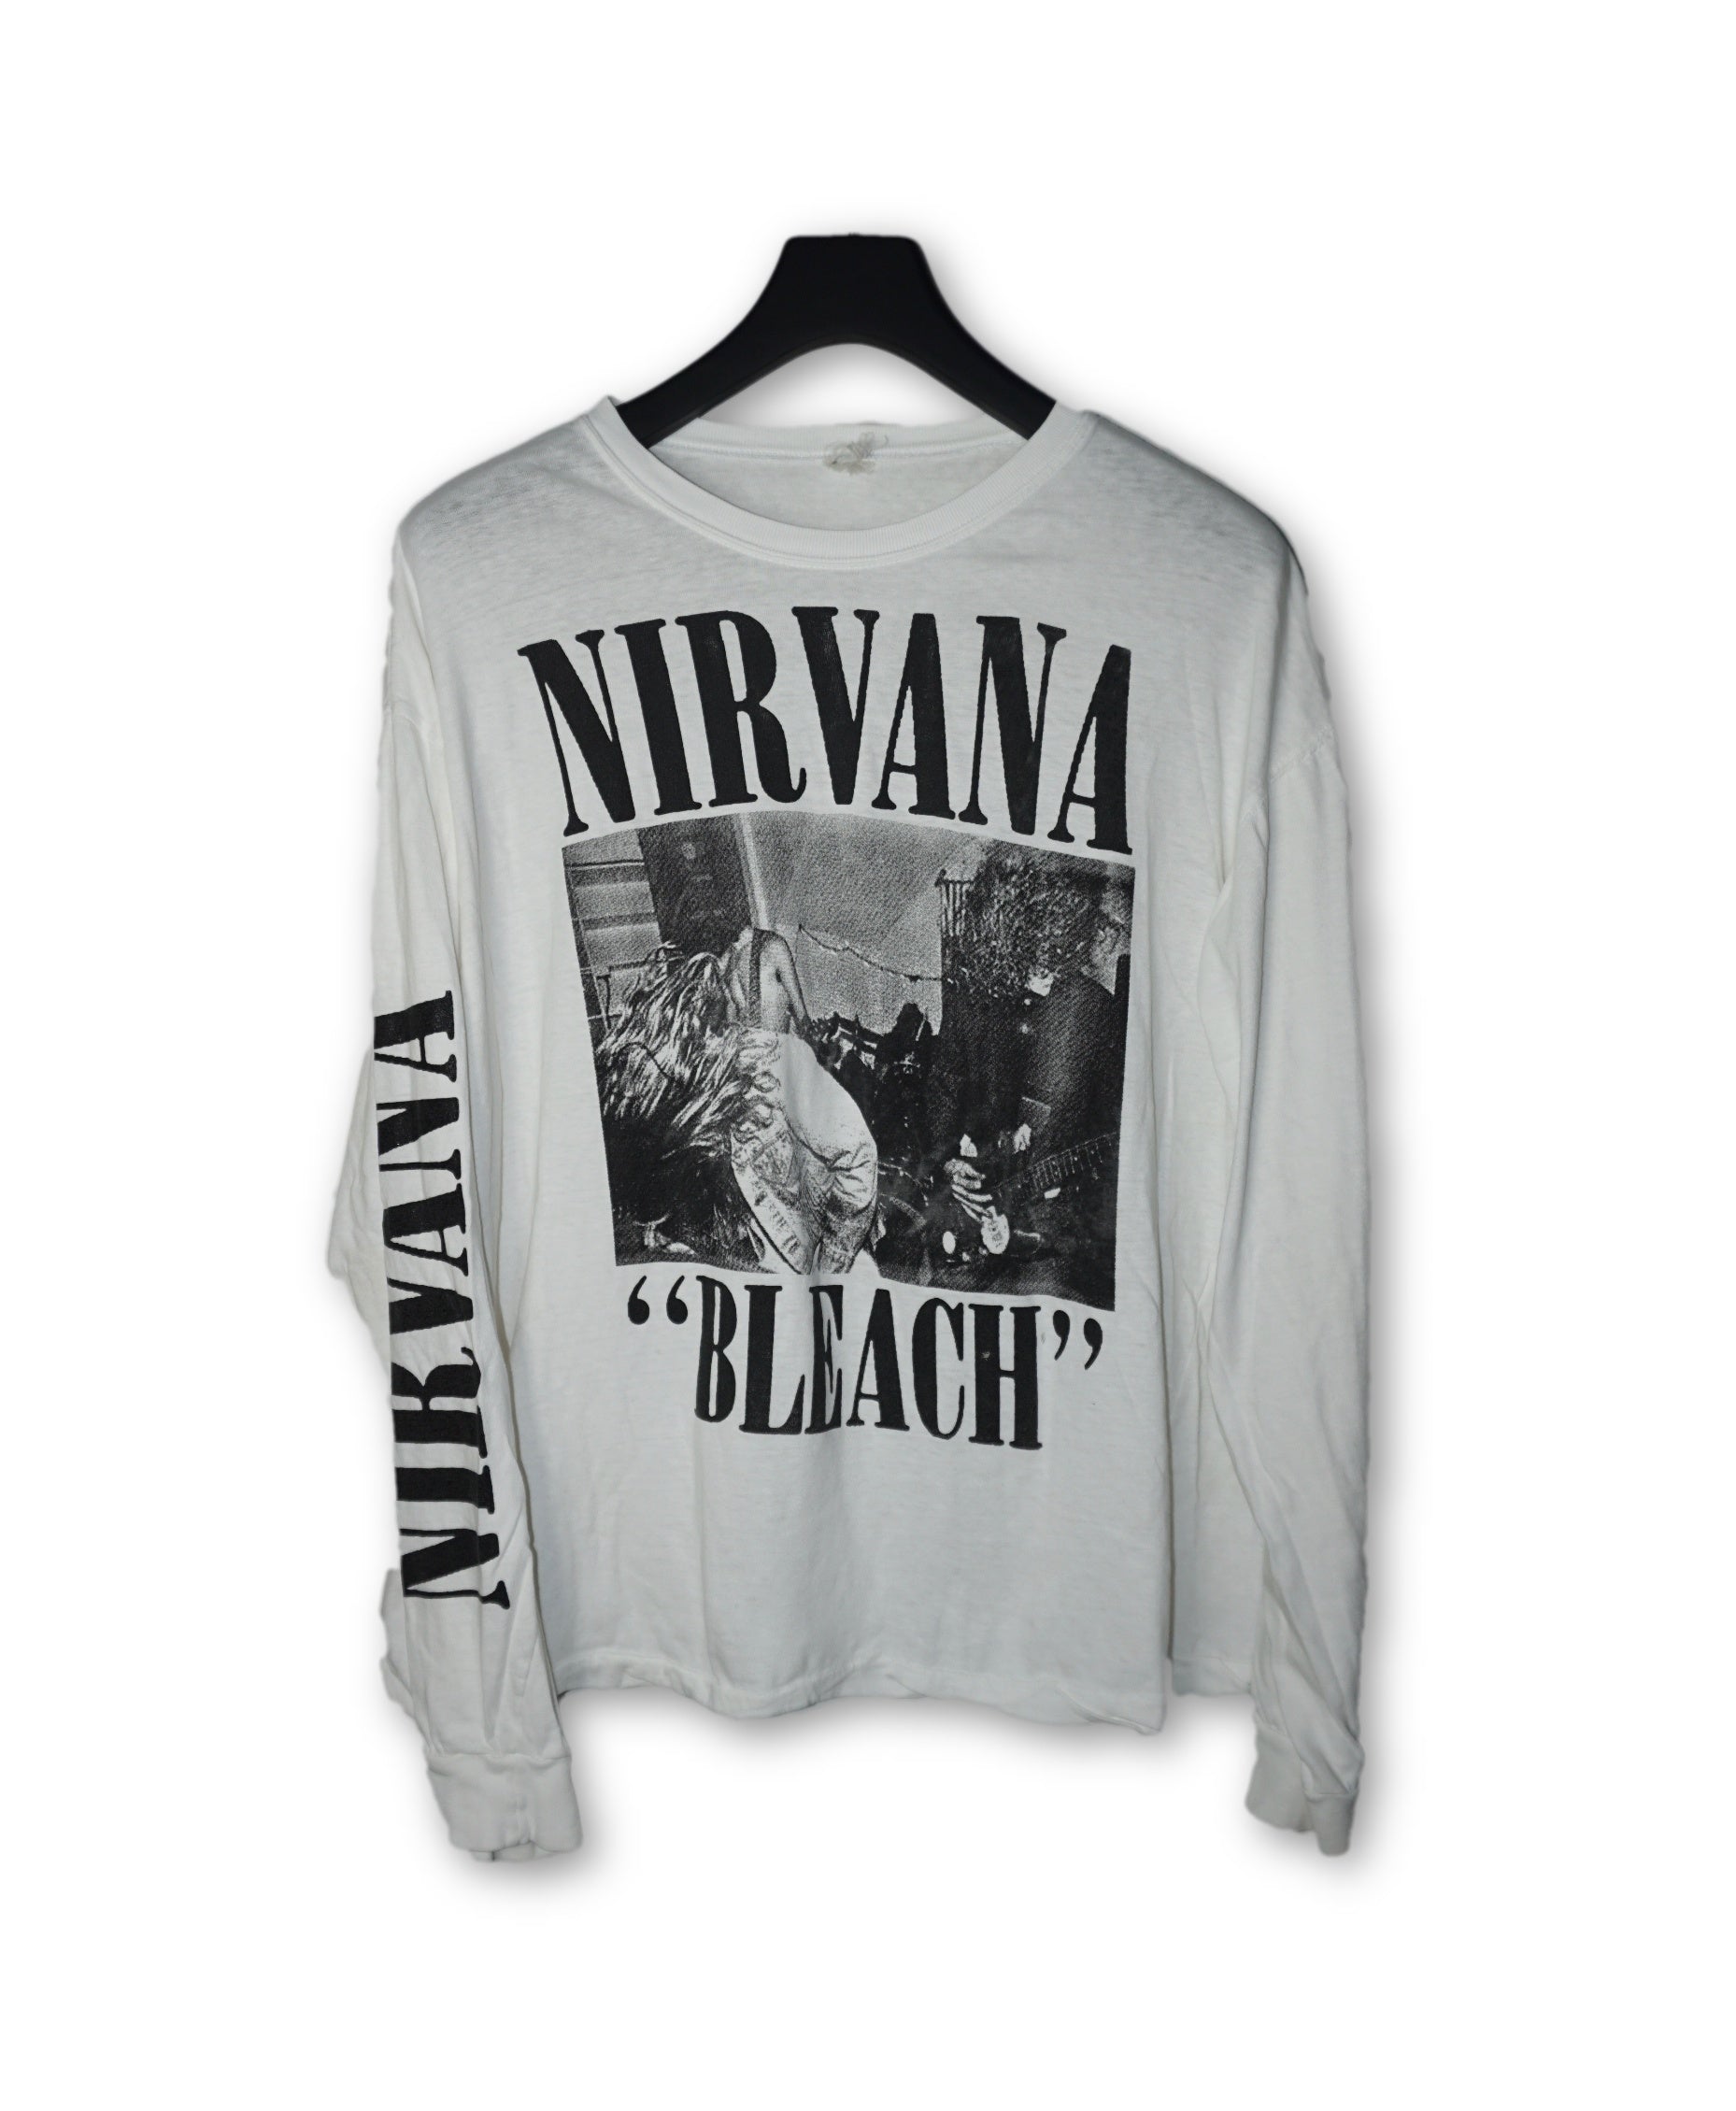 Nirvana Bleach L/S Vintage Rock T-Shirt